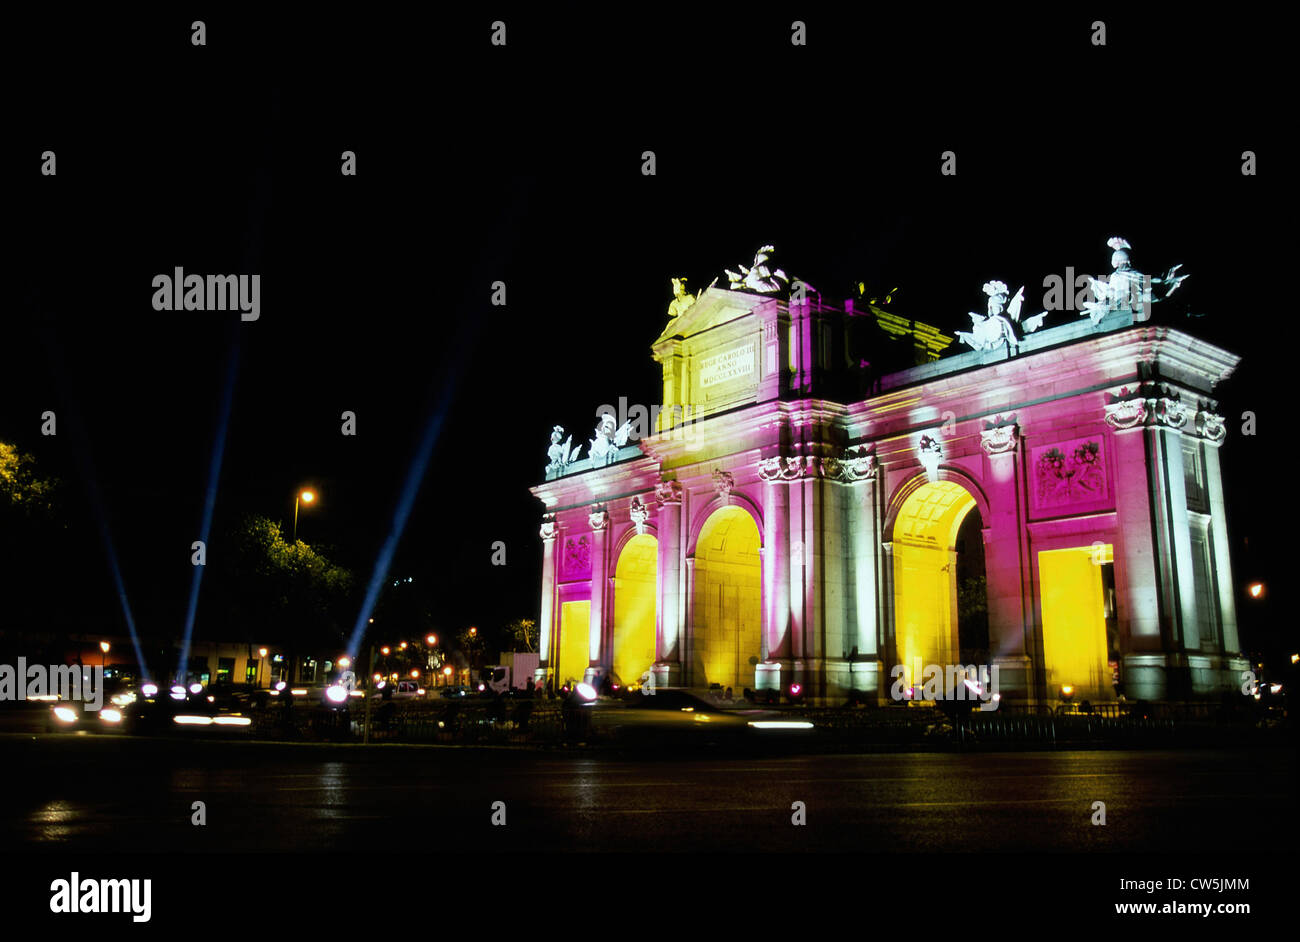 Building lit up at night, Puerta de Alcala, Madrid, Spain Stock Photo